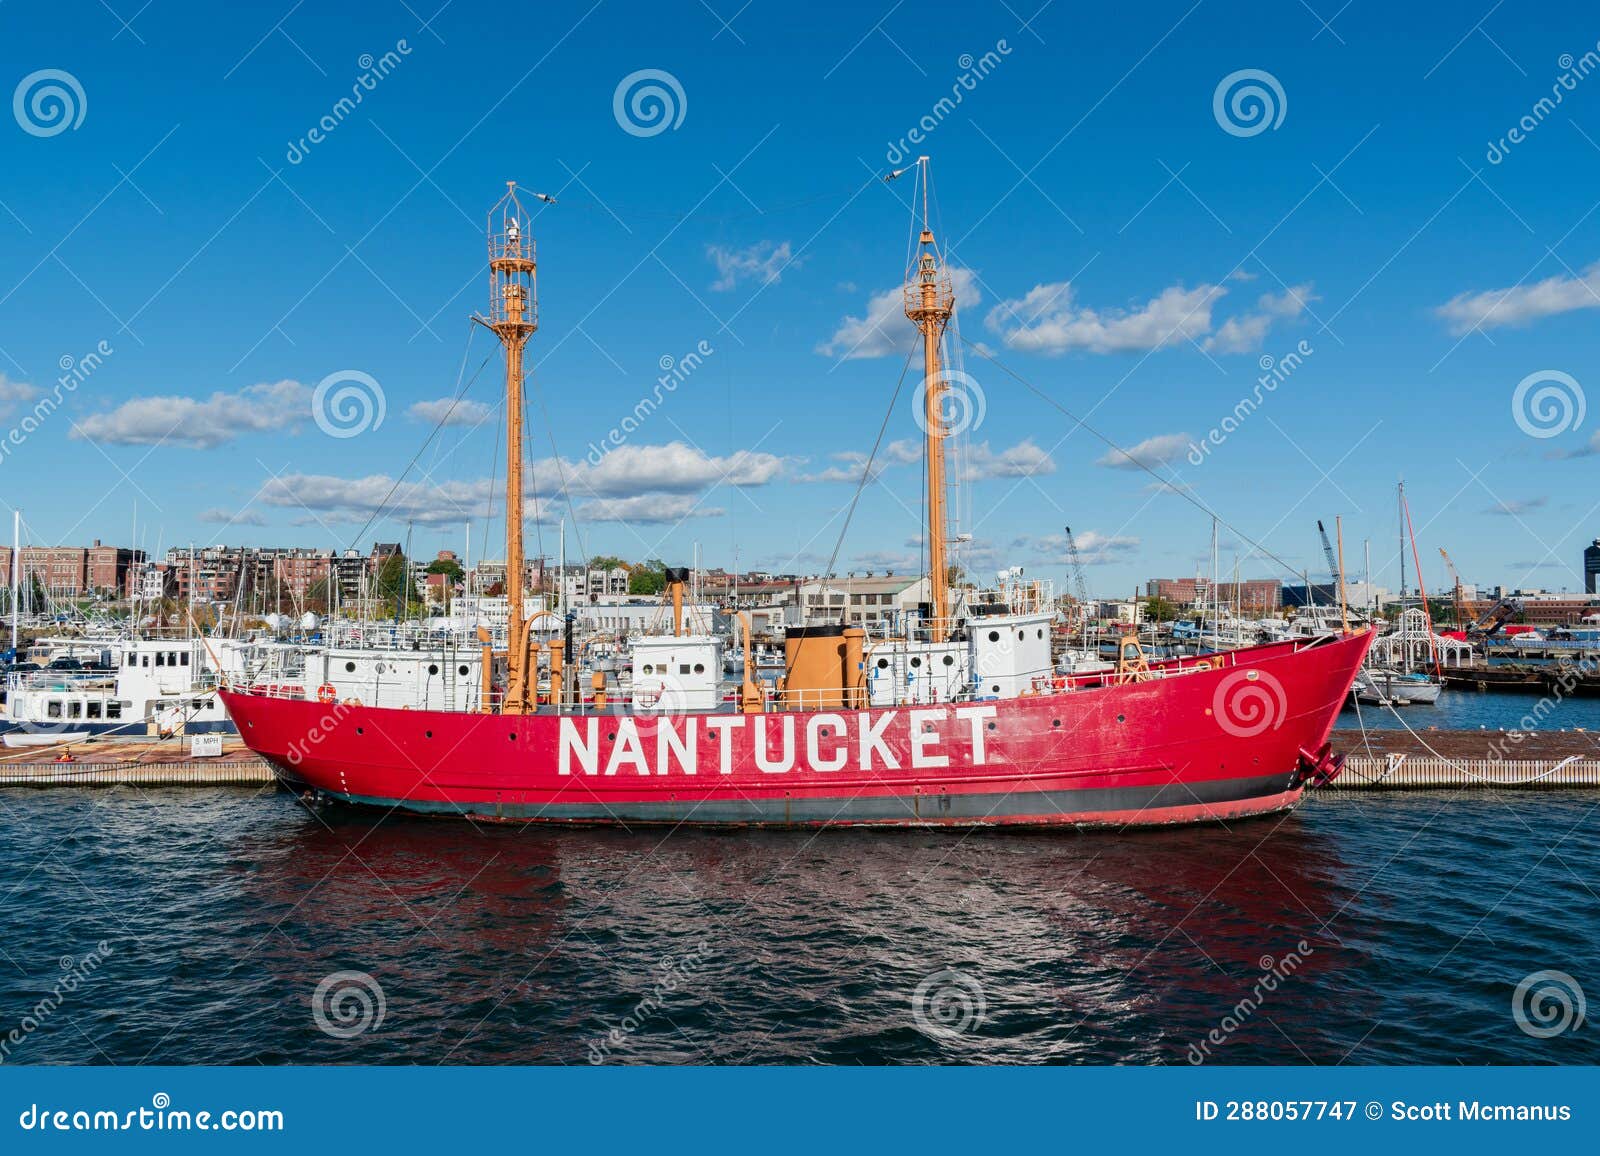 Nantucket Lightship Stock Photos - Free & Royalty-Free Stock